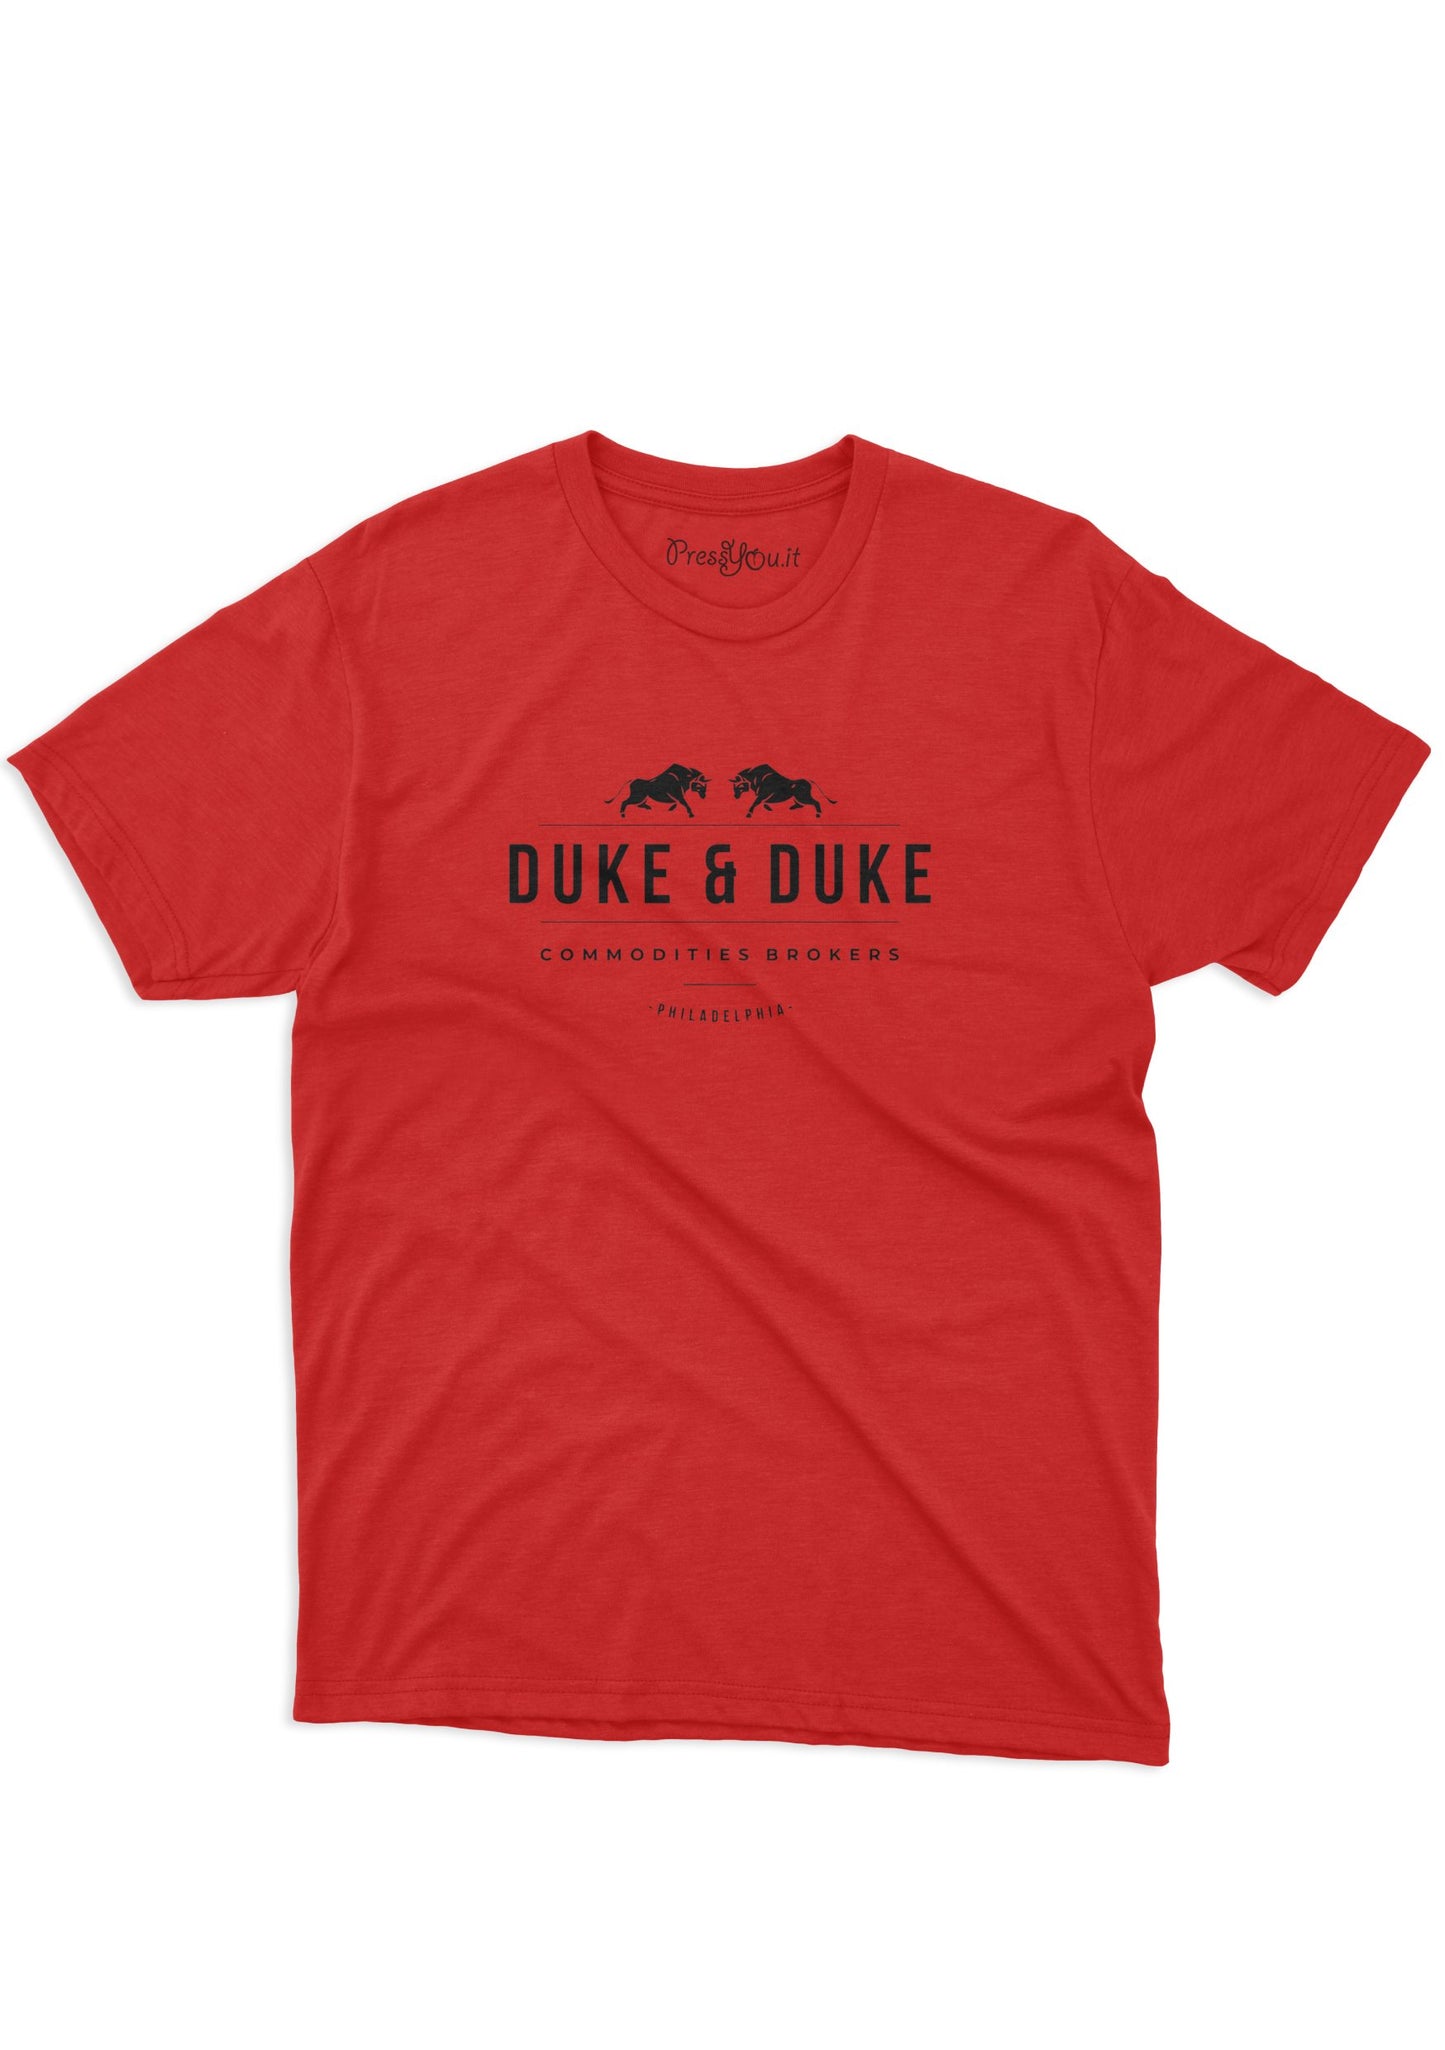 maglietta t-shirt-duke and duke  una poltrona anni 80 cult